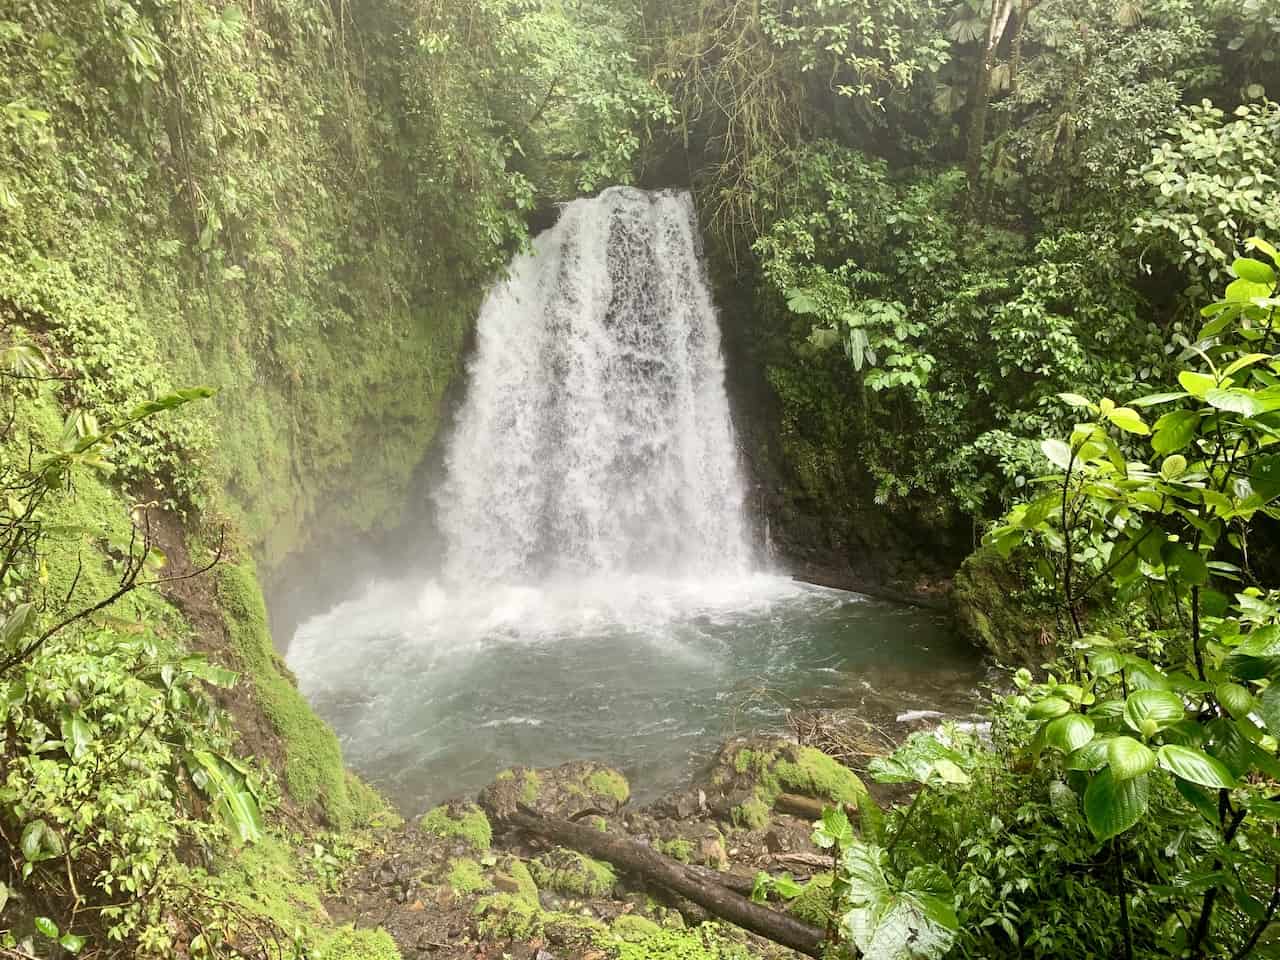 Danta Waterfall